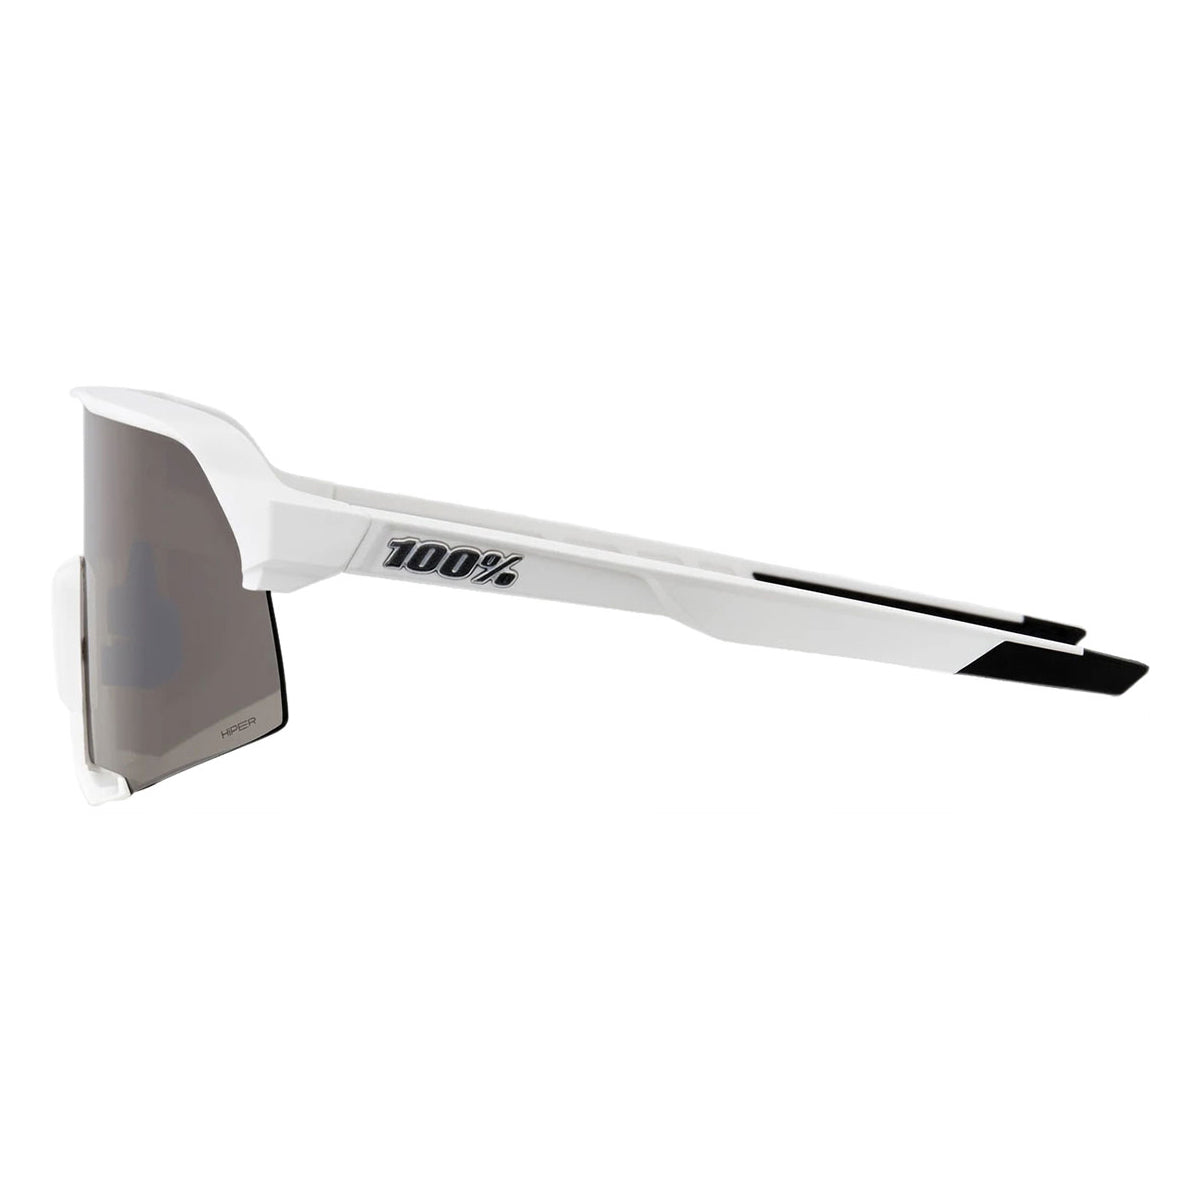 100 Percent S3 Sunglasses - Matte White - HiPER Silver Mirror Lens